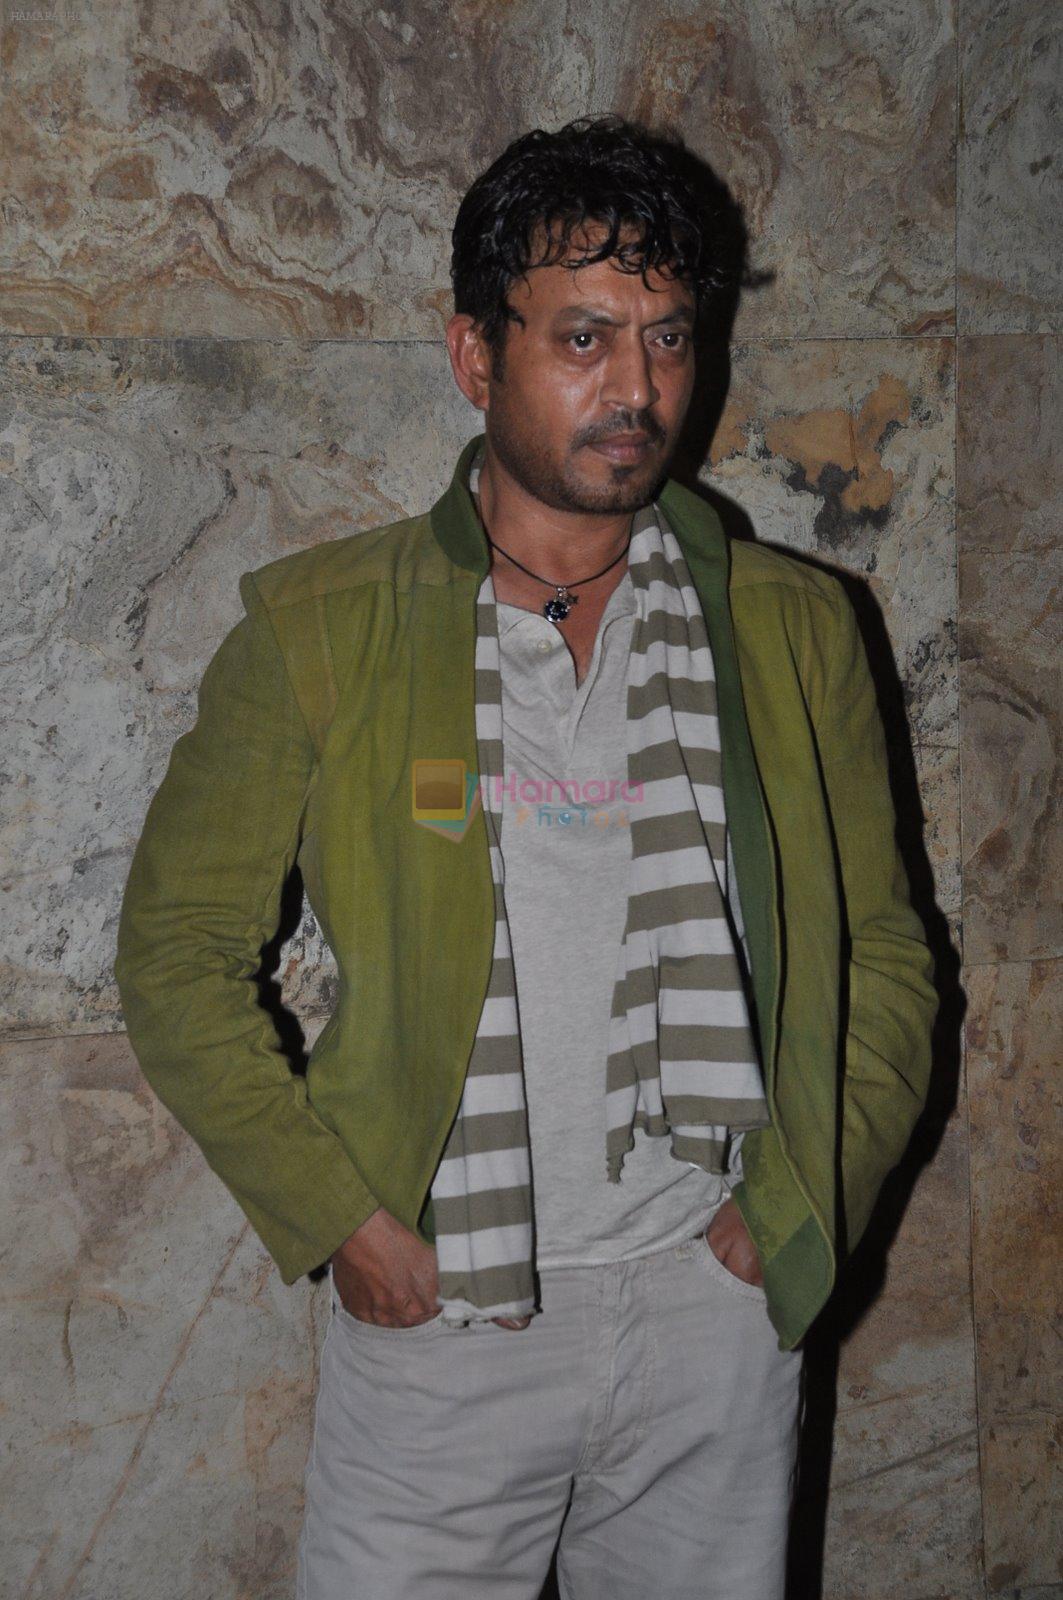 Irrfan Khan at Qissa screening in Lightbox, Mumbai on 19th Feb 2015